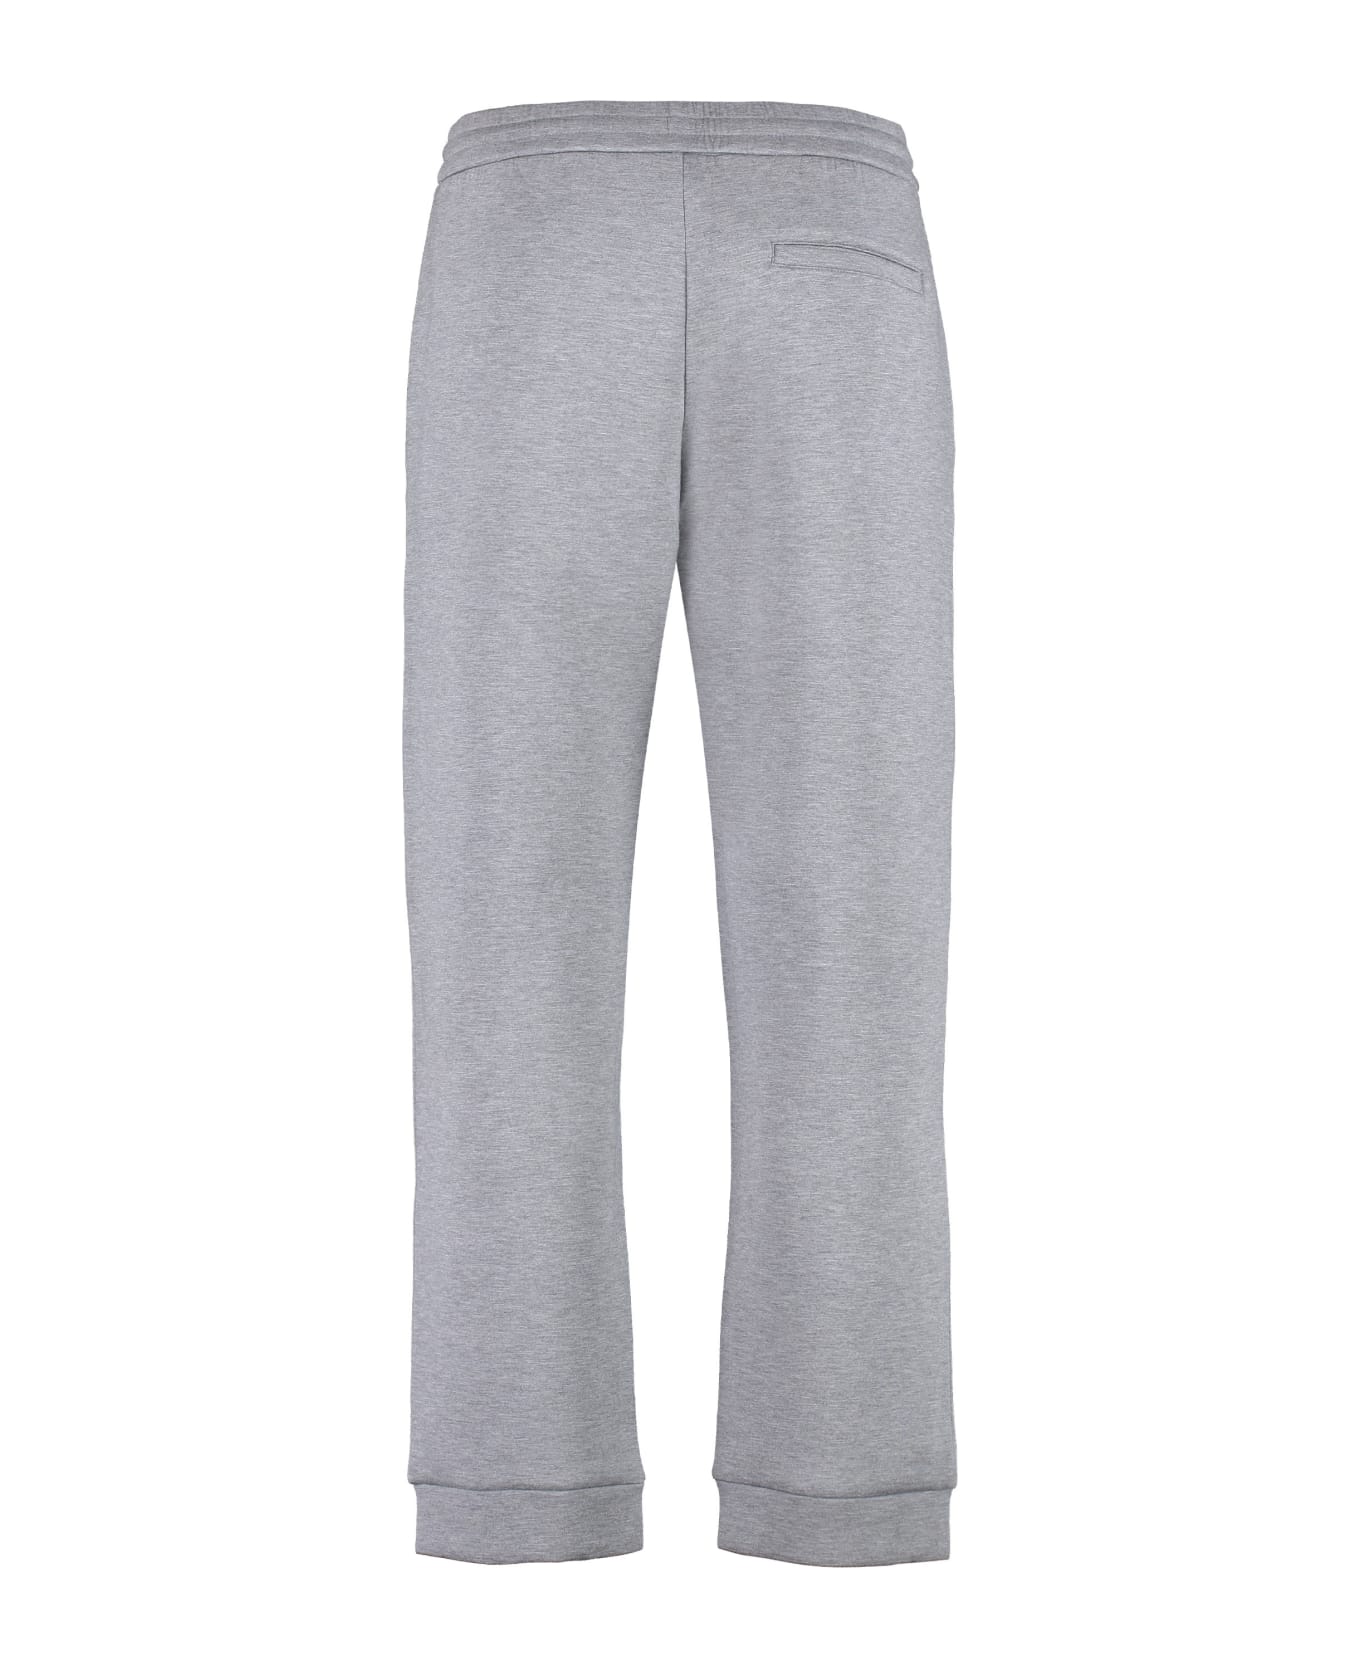 Emporio Armani Embroidered Sweatpants - grey